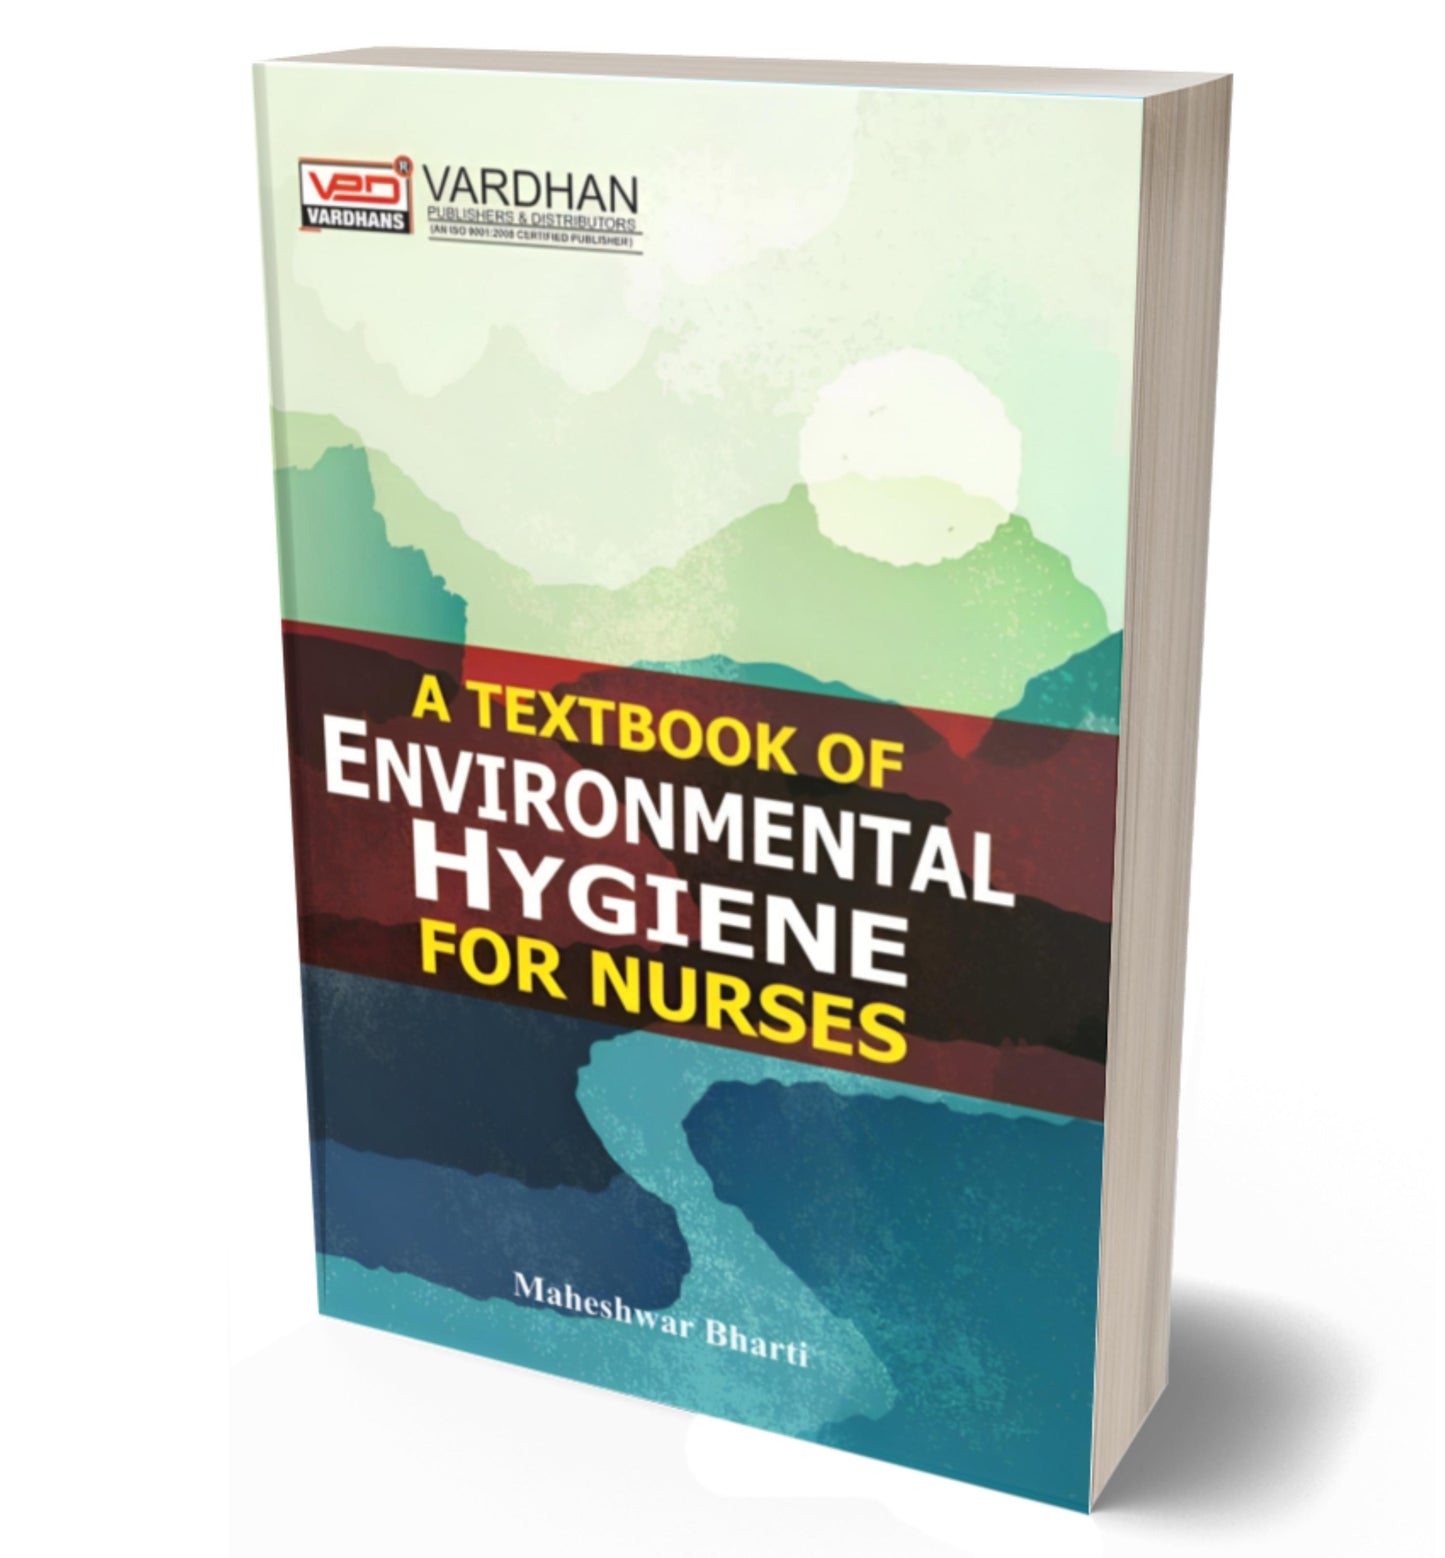 A Textbook of Environmental Hygiene for Nurses